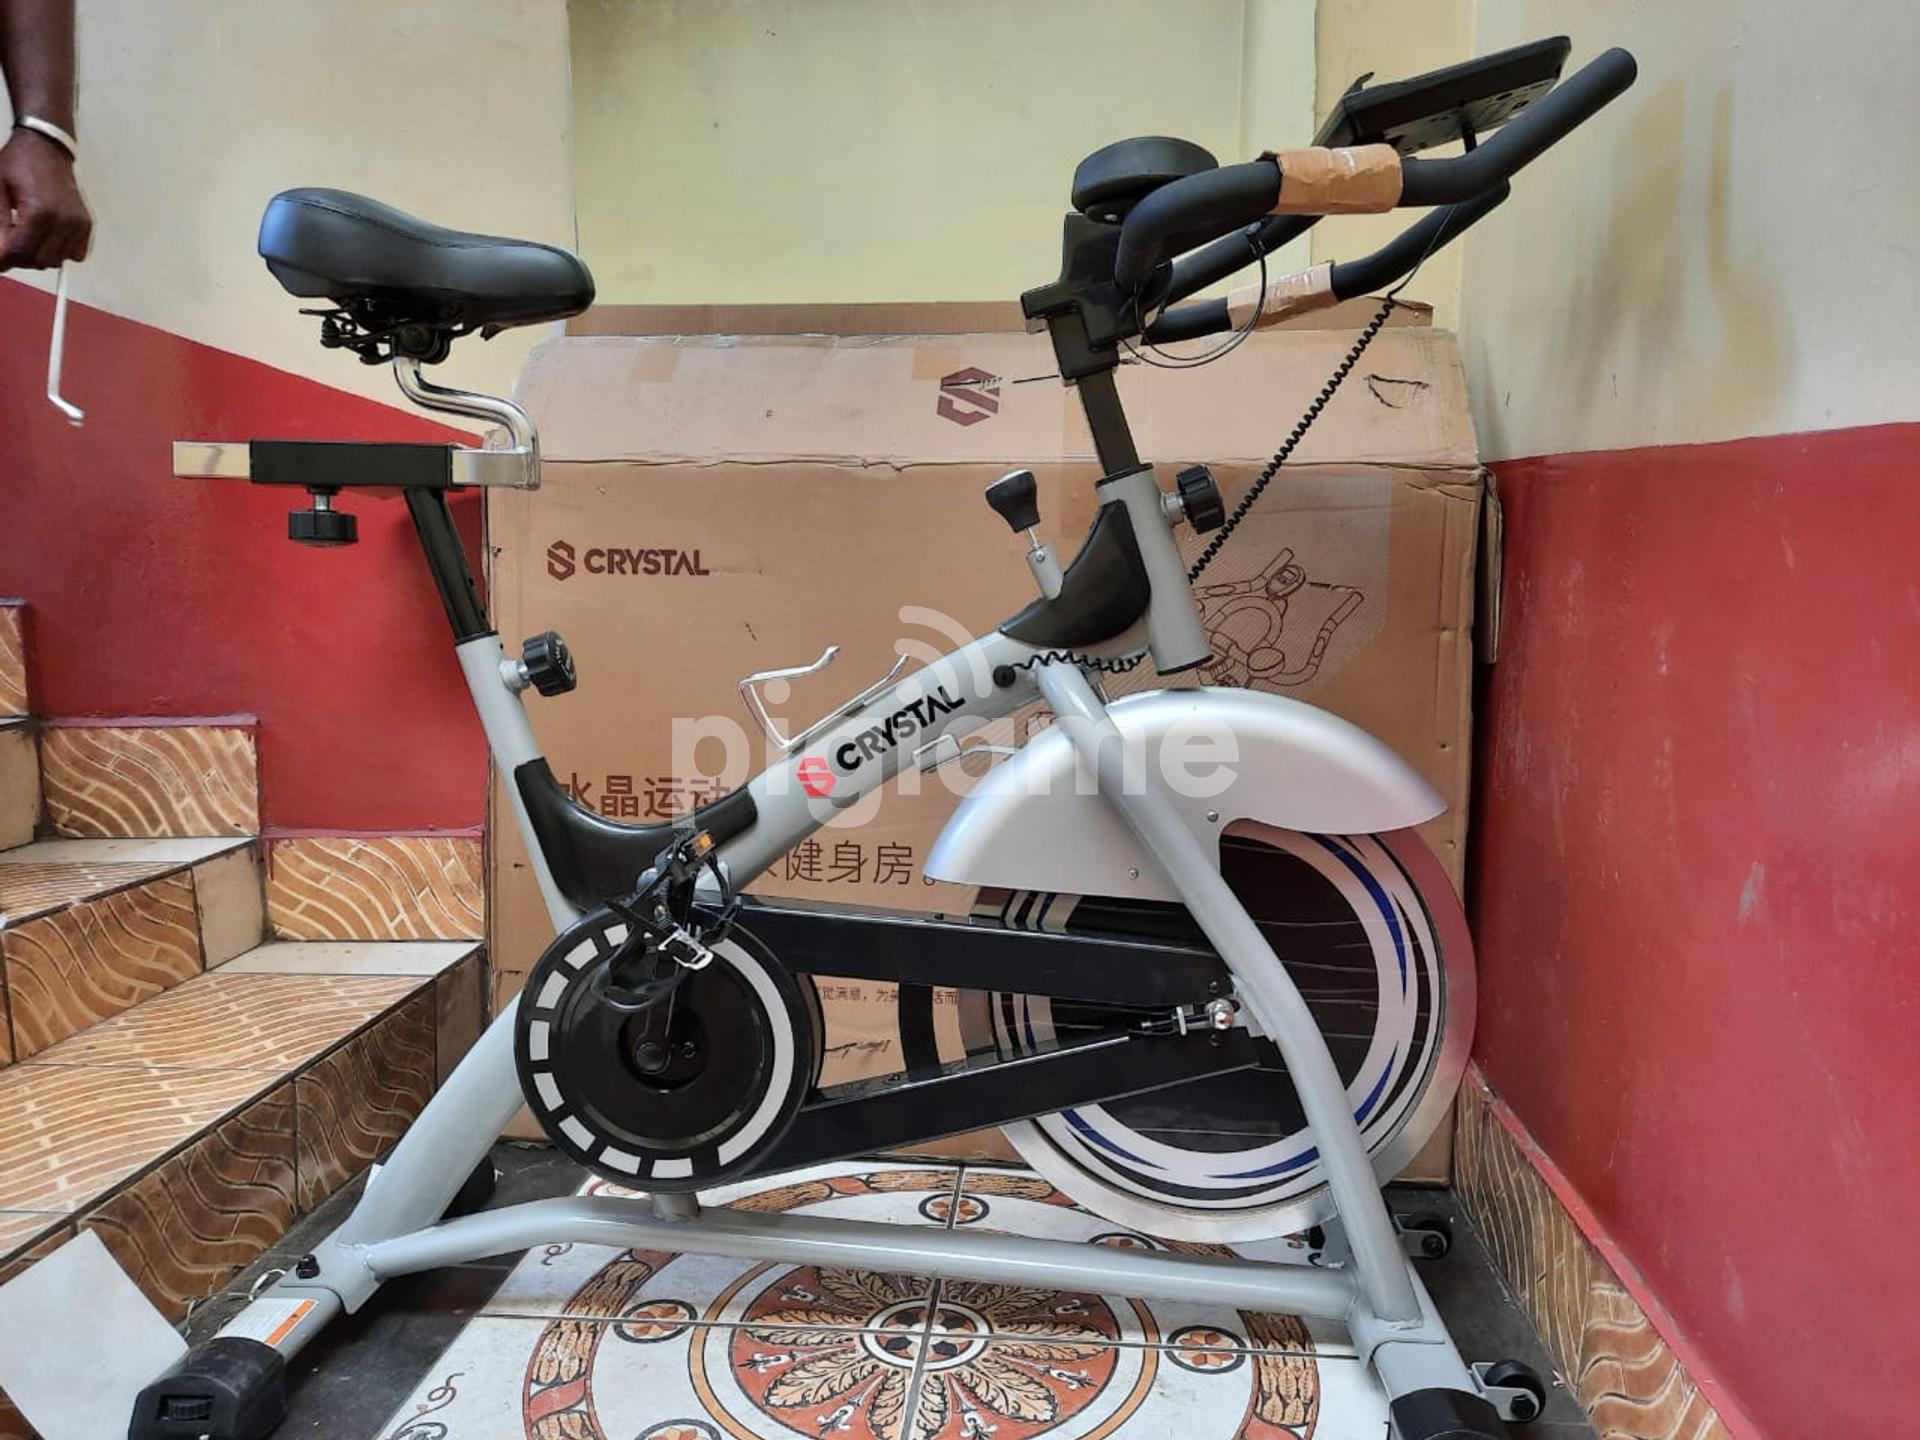 18kg flywheel spin bike